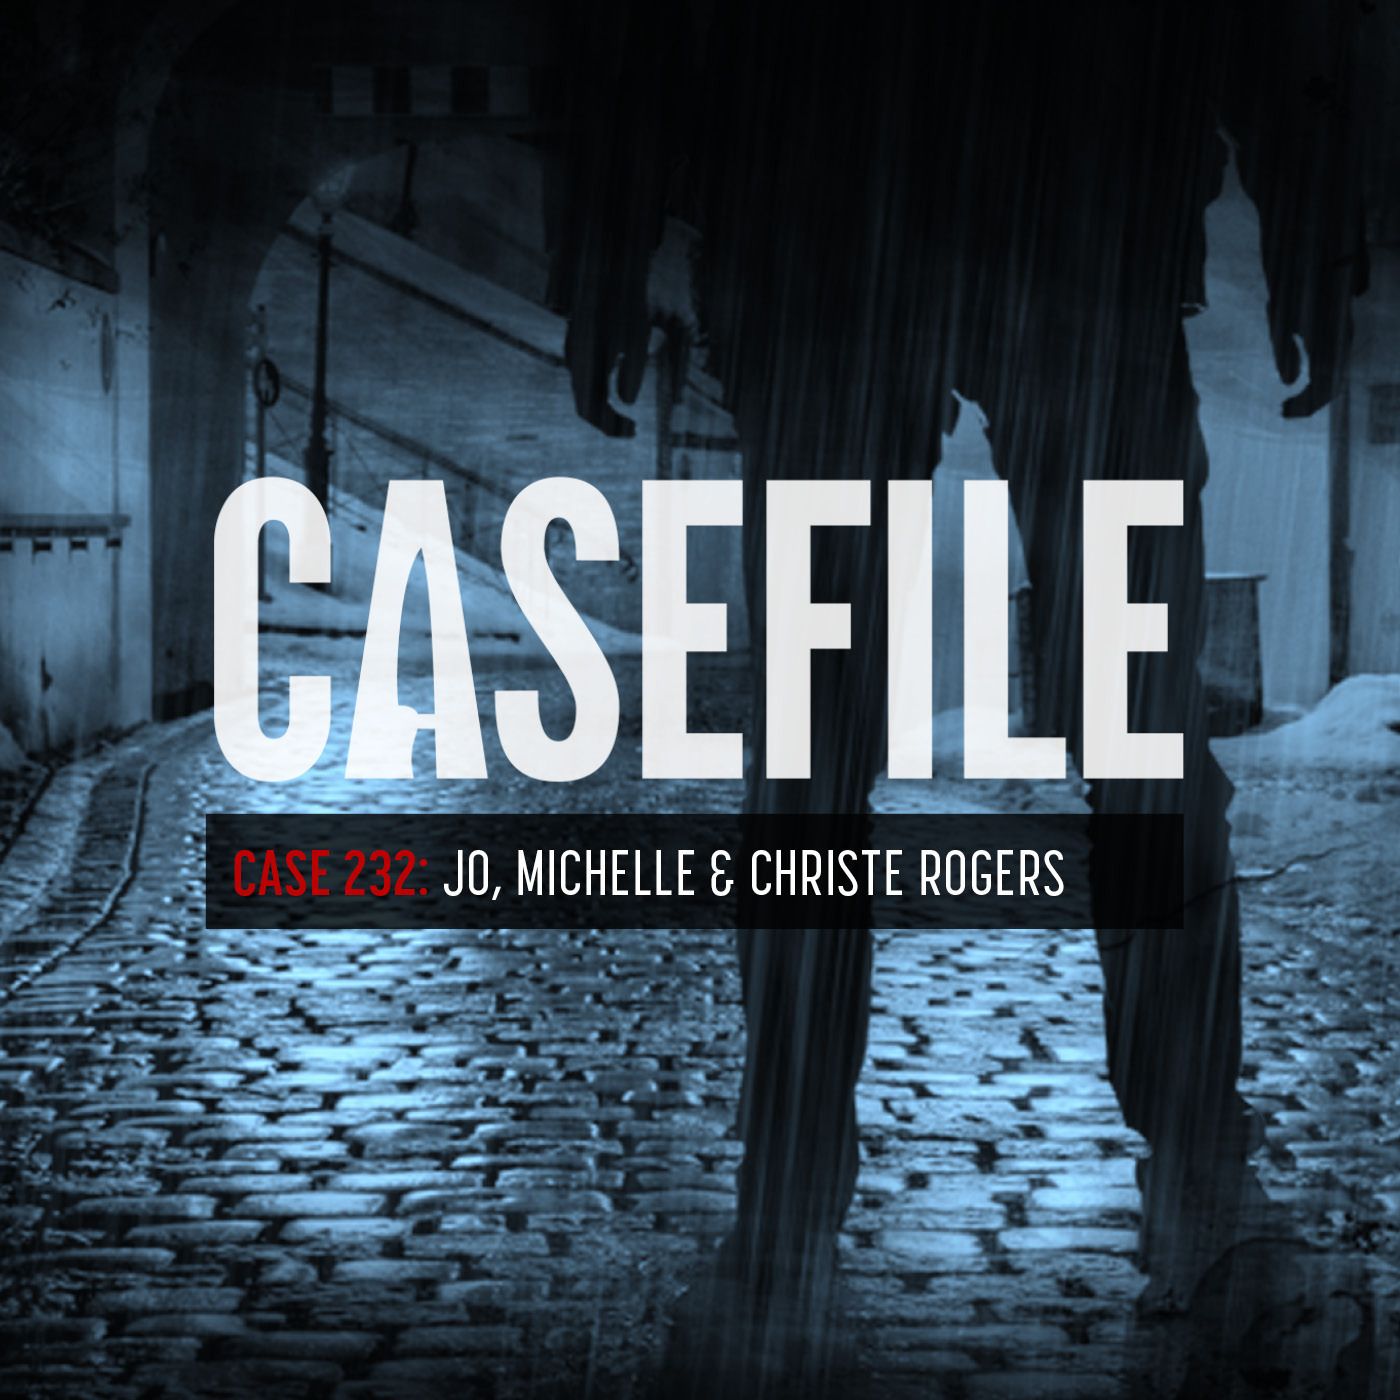 Case 232: Jo, Michelle & Christe Rogers